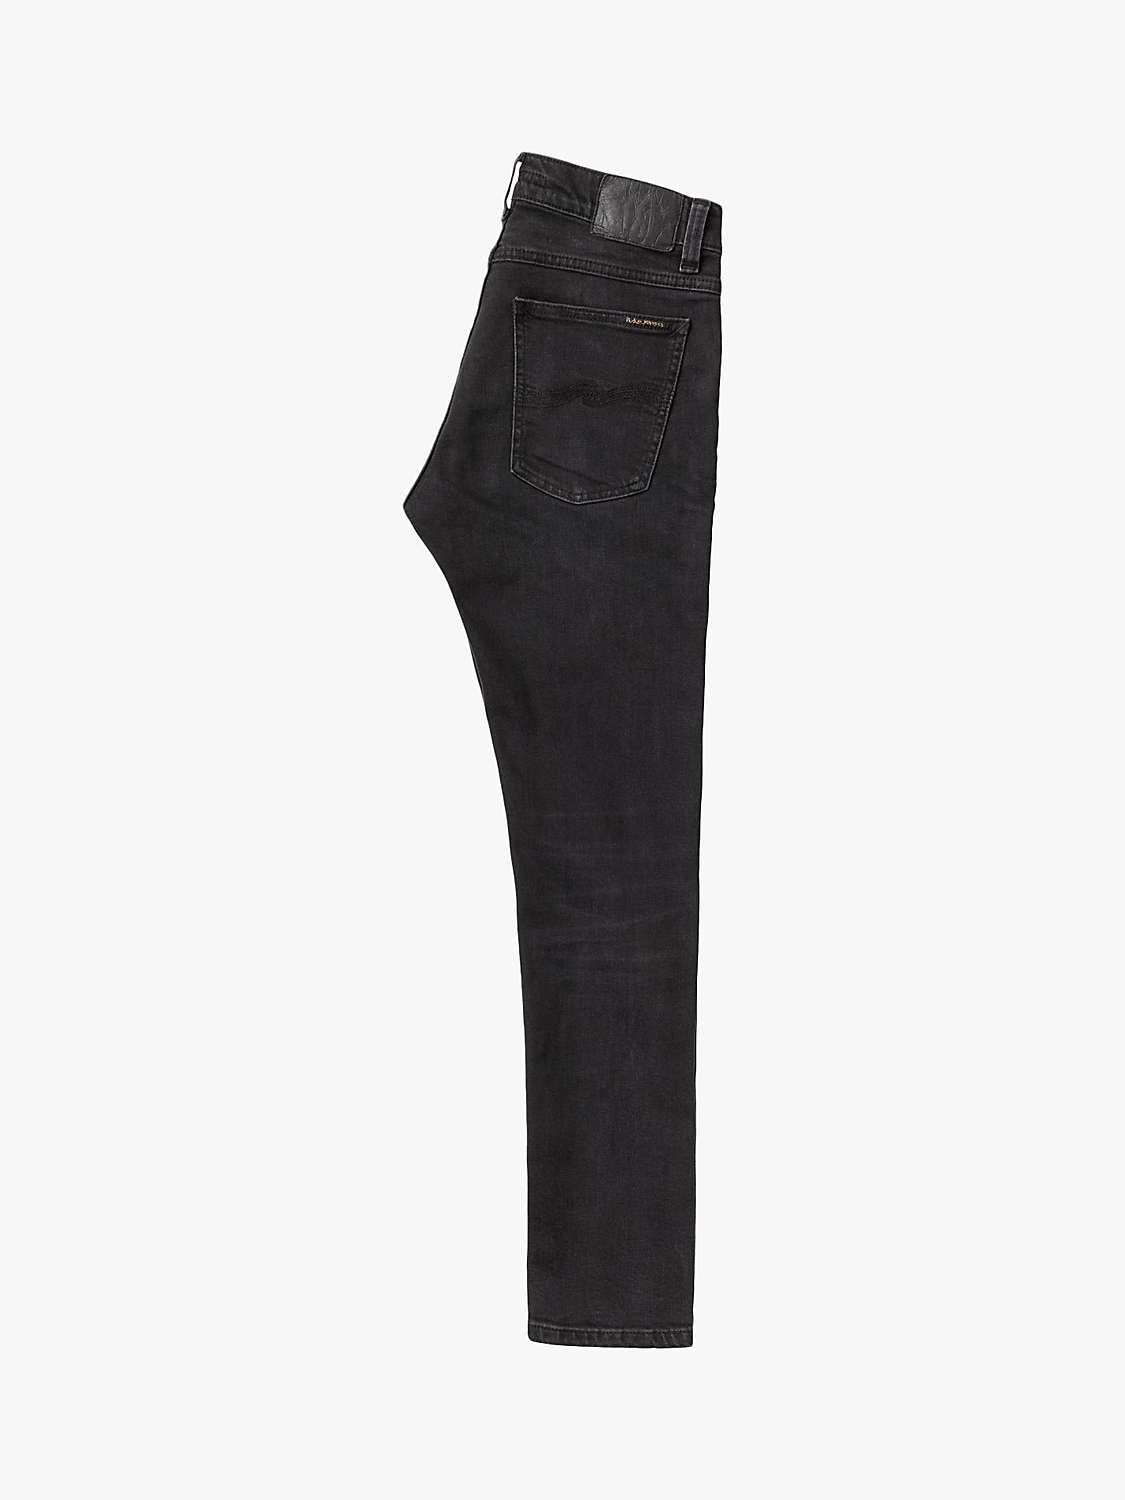 Buy Nudie Jeans Slim Tight Terry Jeans, City Dust Online at johnlewis.com